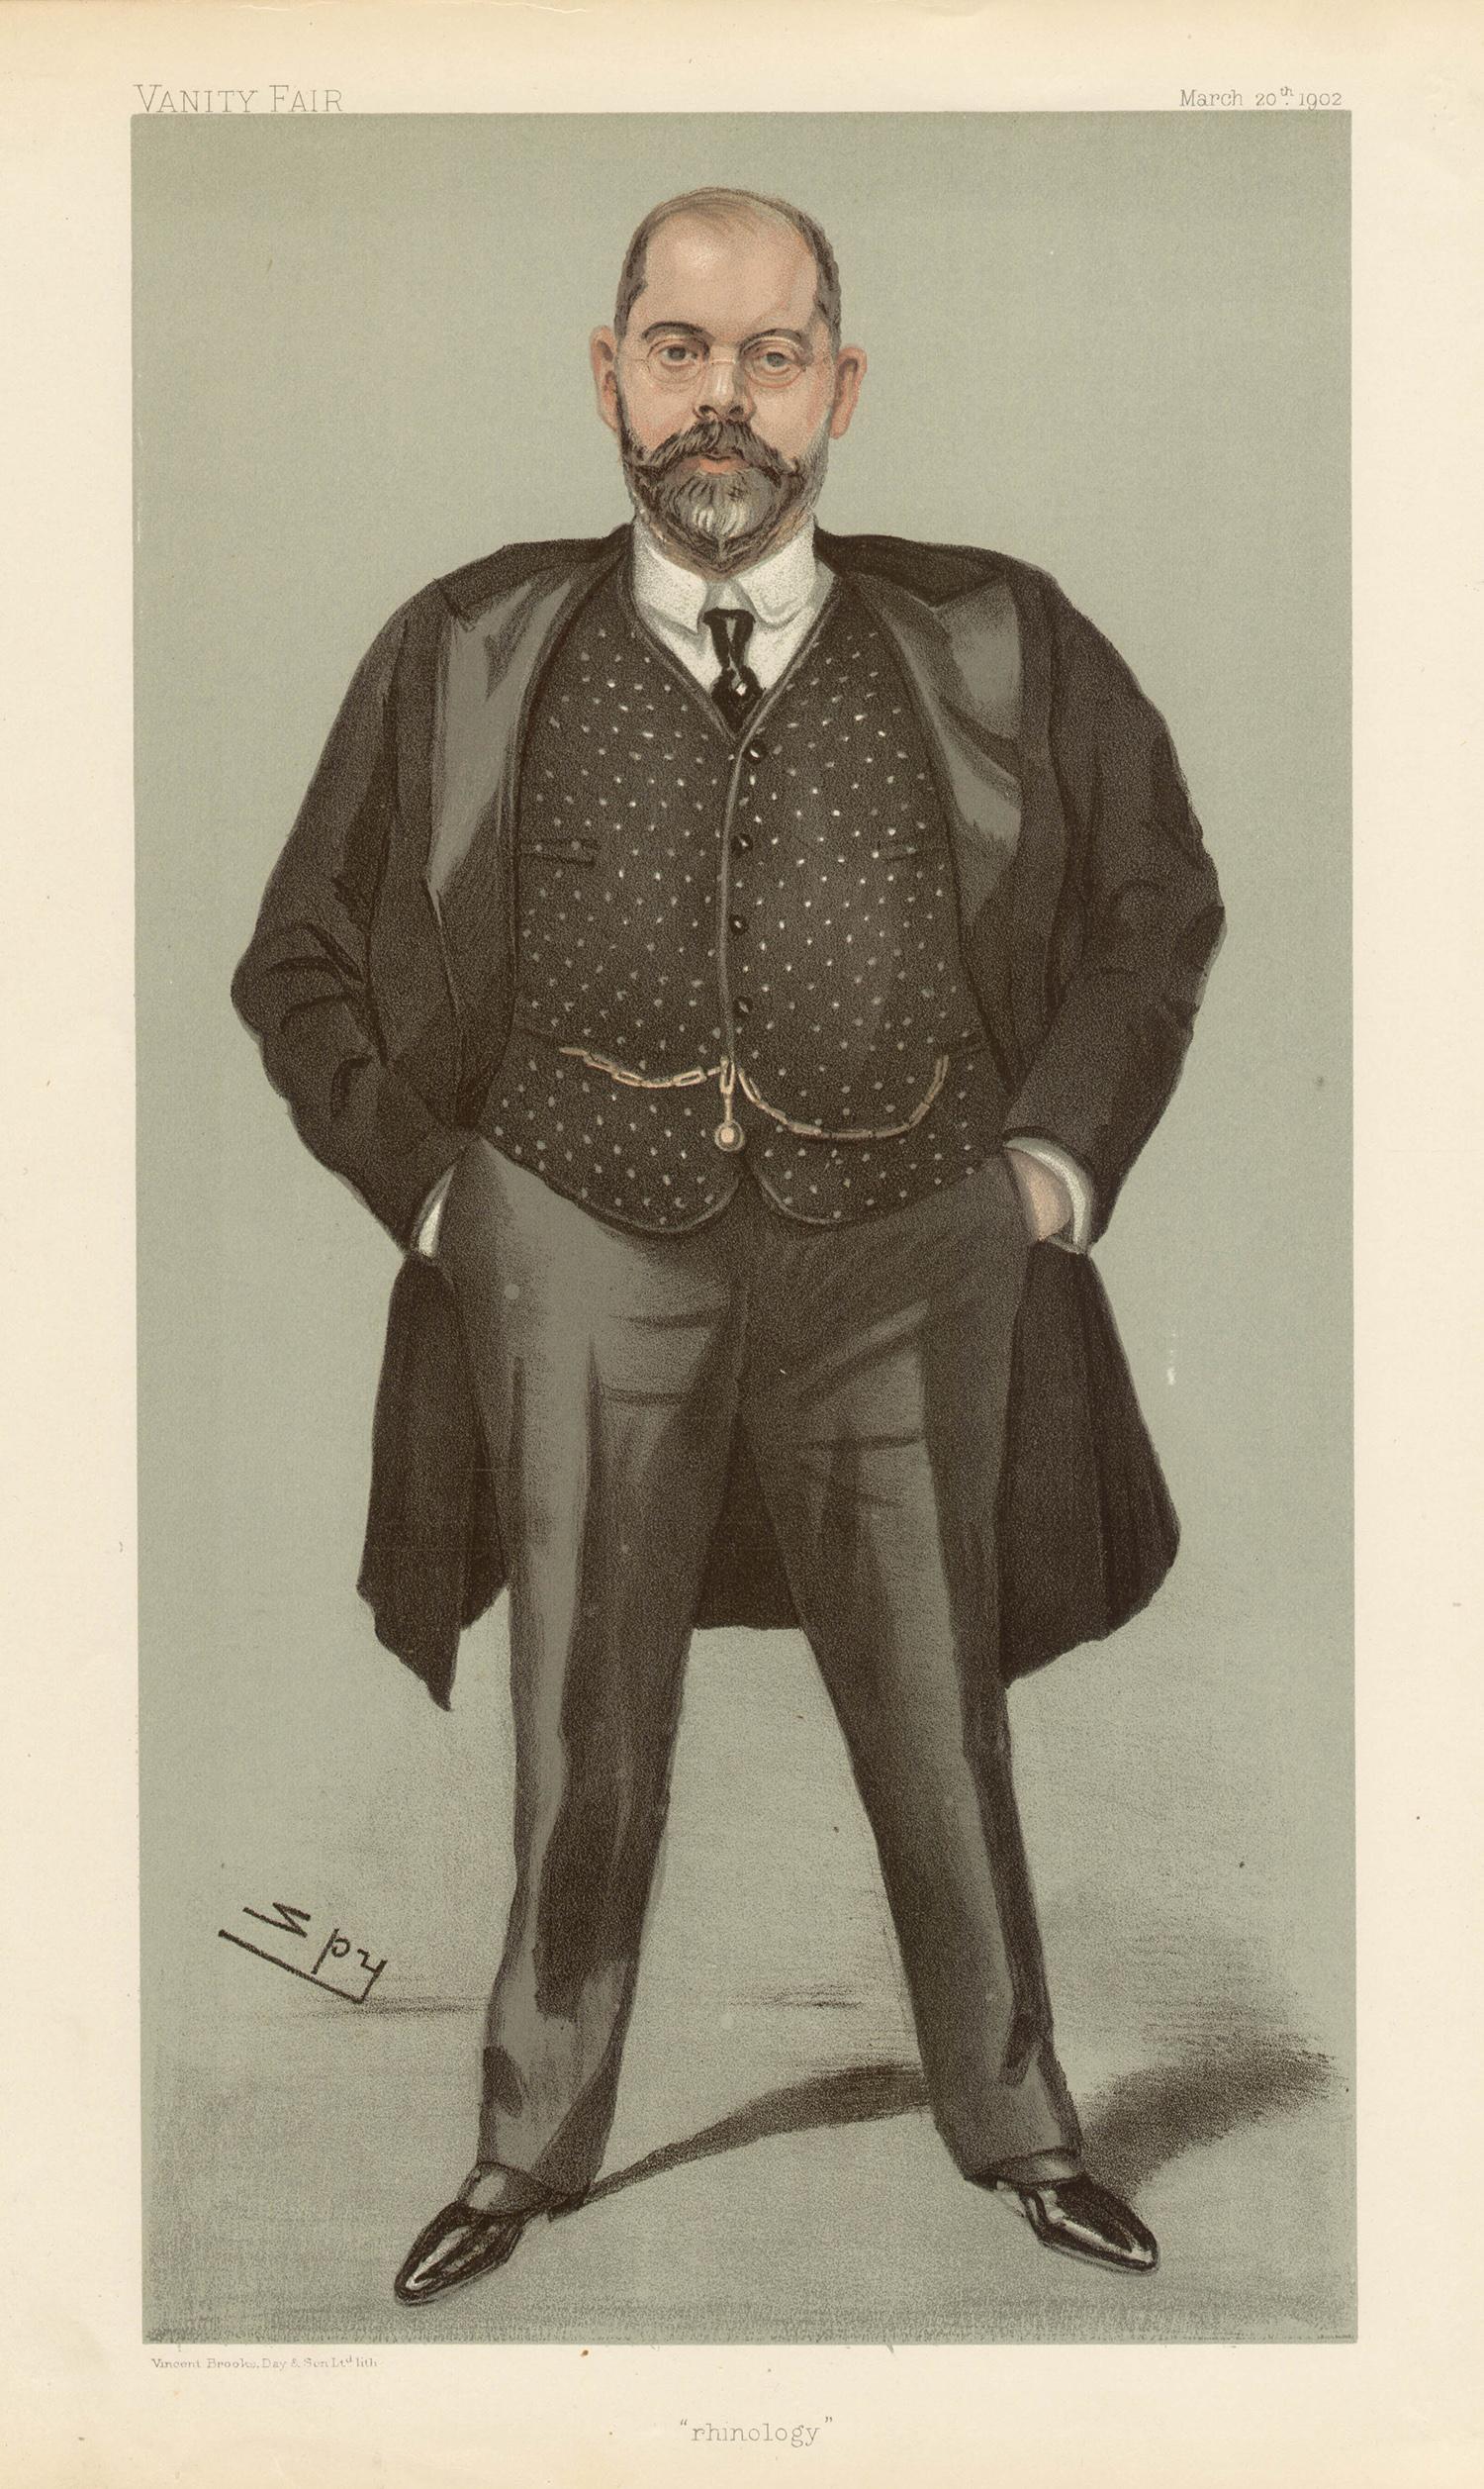 Sir Leslie Ward Portrait Print - Dr Robert Spicer, Vanity Fair medical portrait chromolithograph, 1902